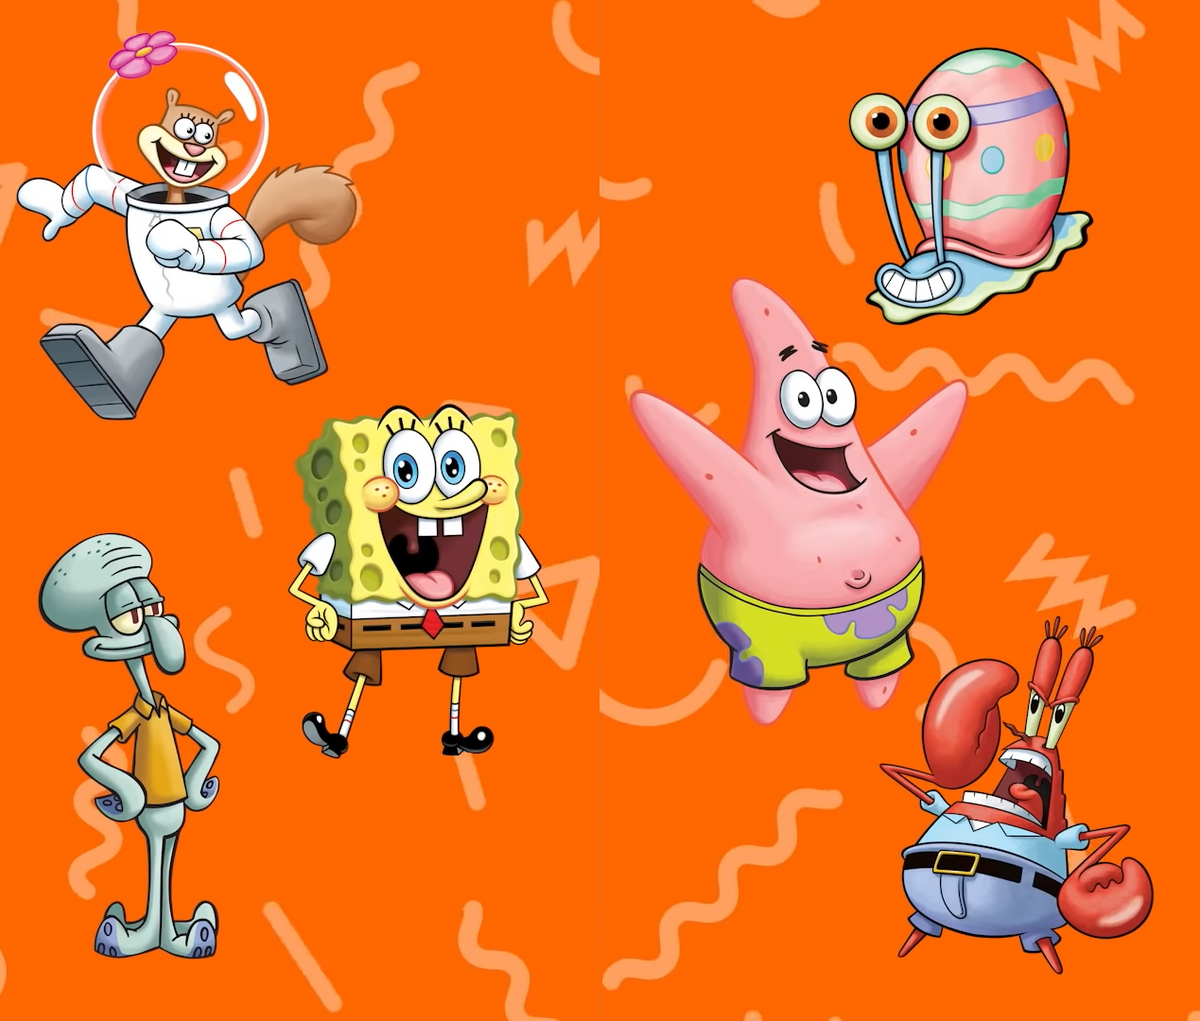 File:SpongeBob SquarePants character montage.png - Wikipedia